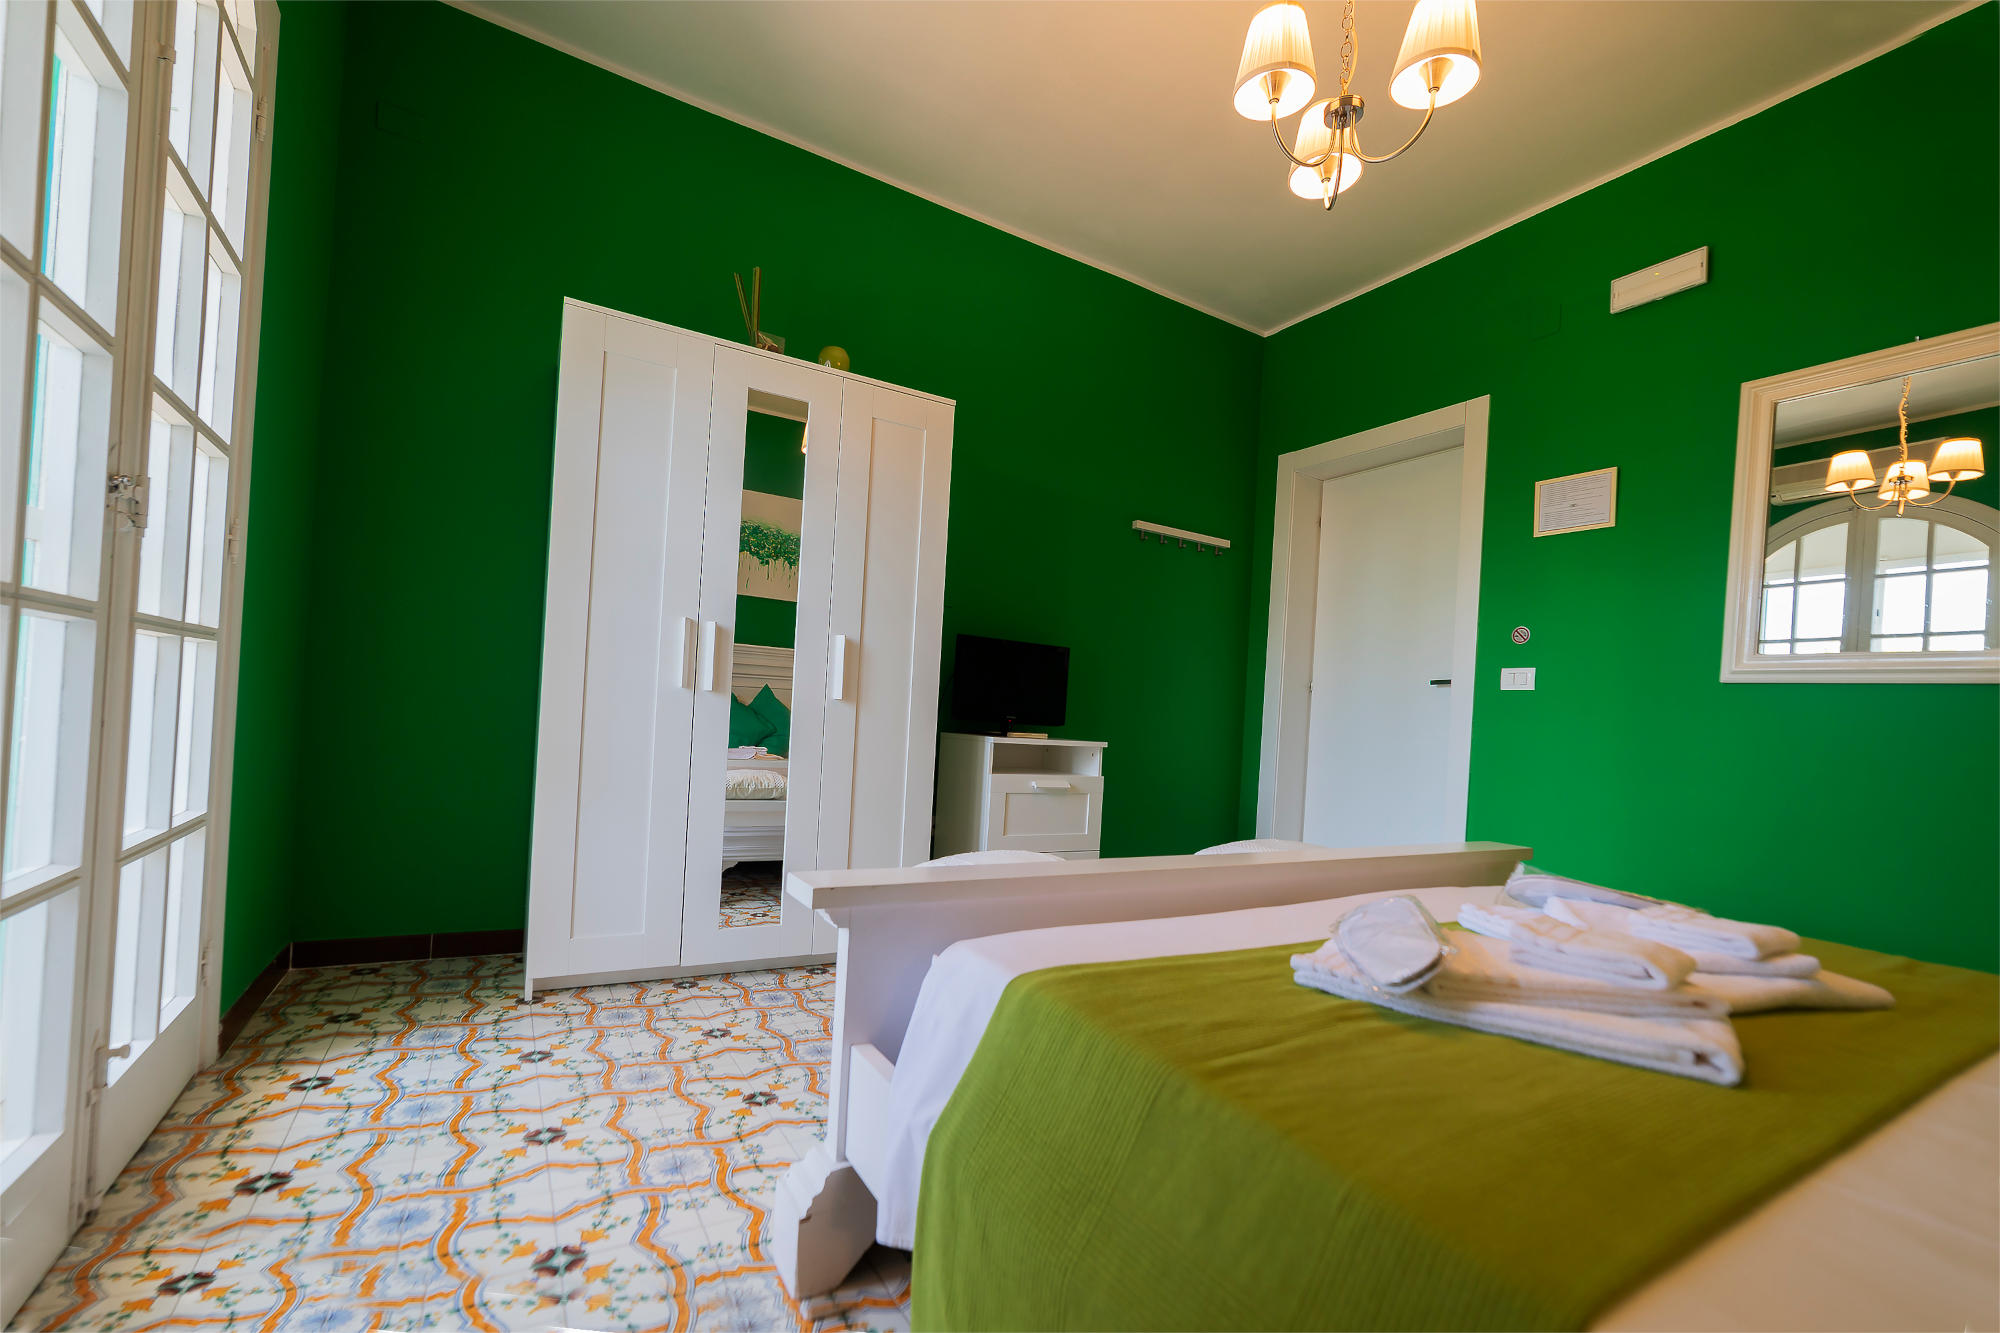 Le Saline B&B Siracusa Green Room: double bed and furnishings